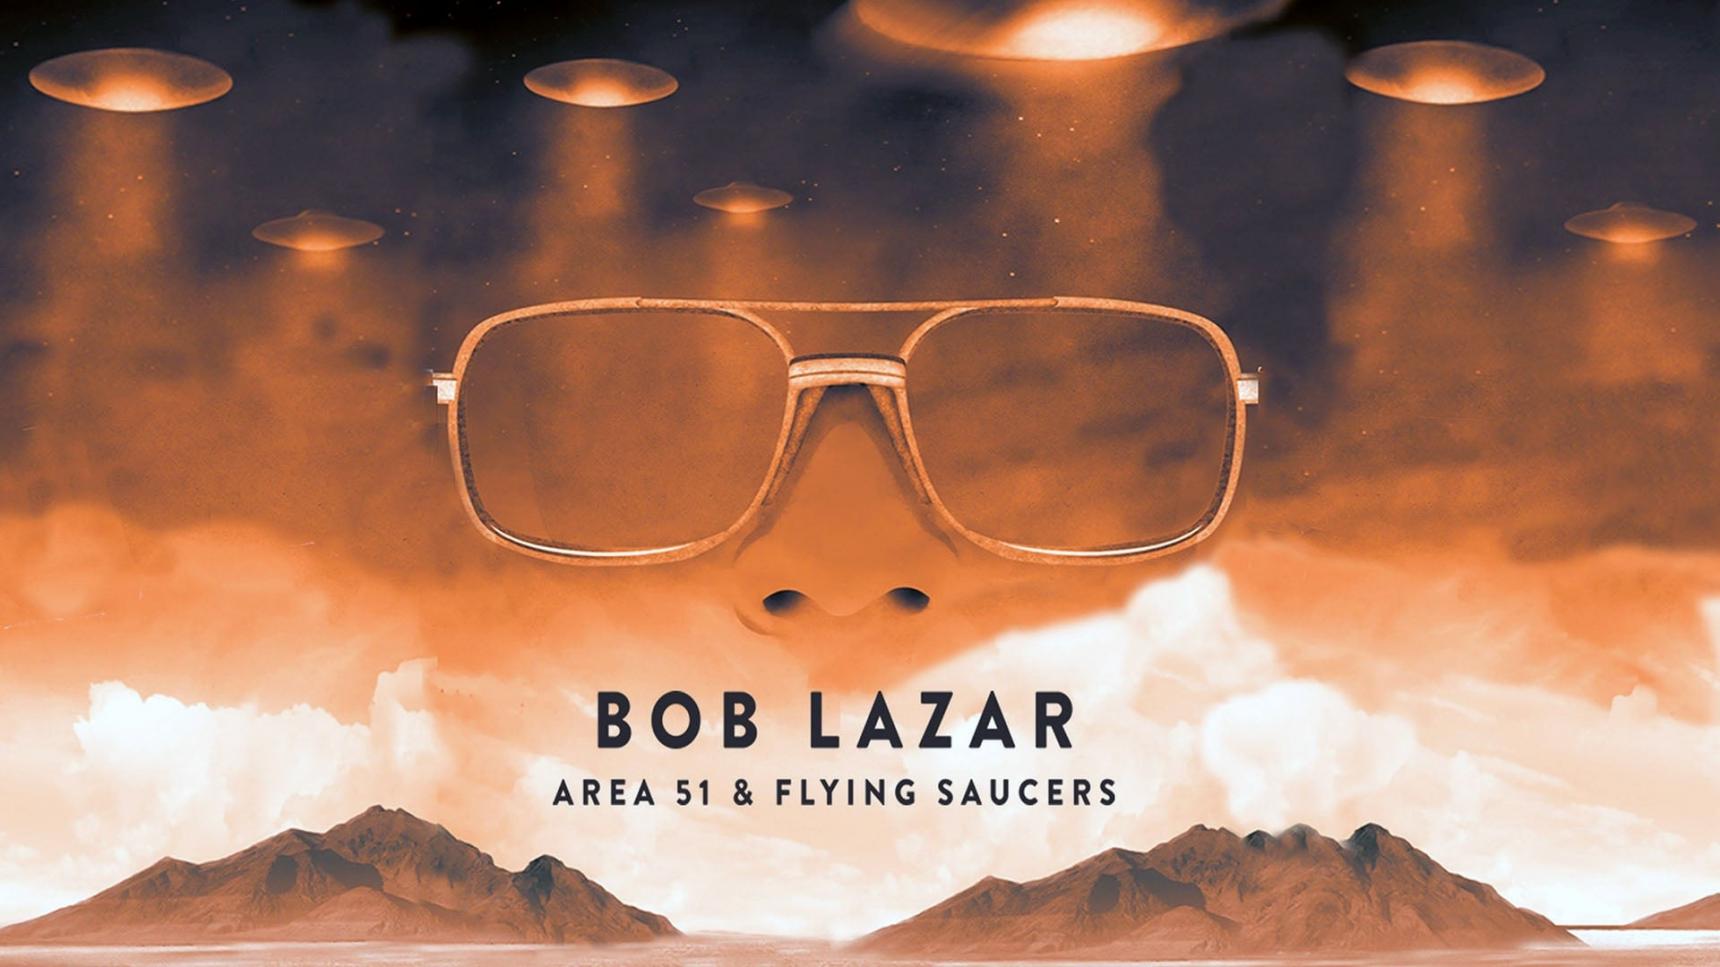 categorias de Bob Lazar: Area 51 & Flying Saucers